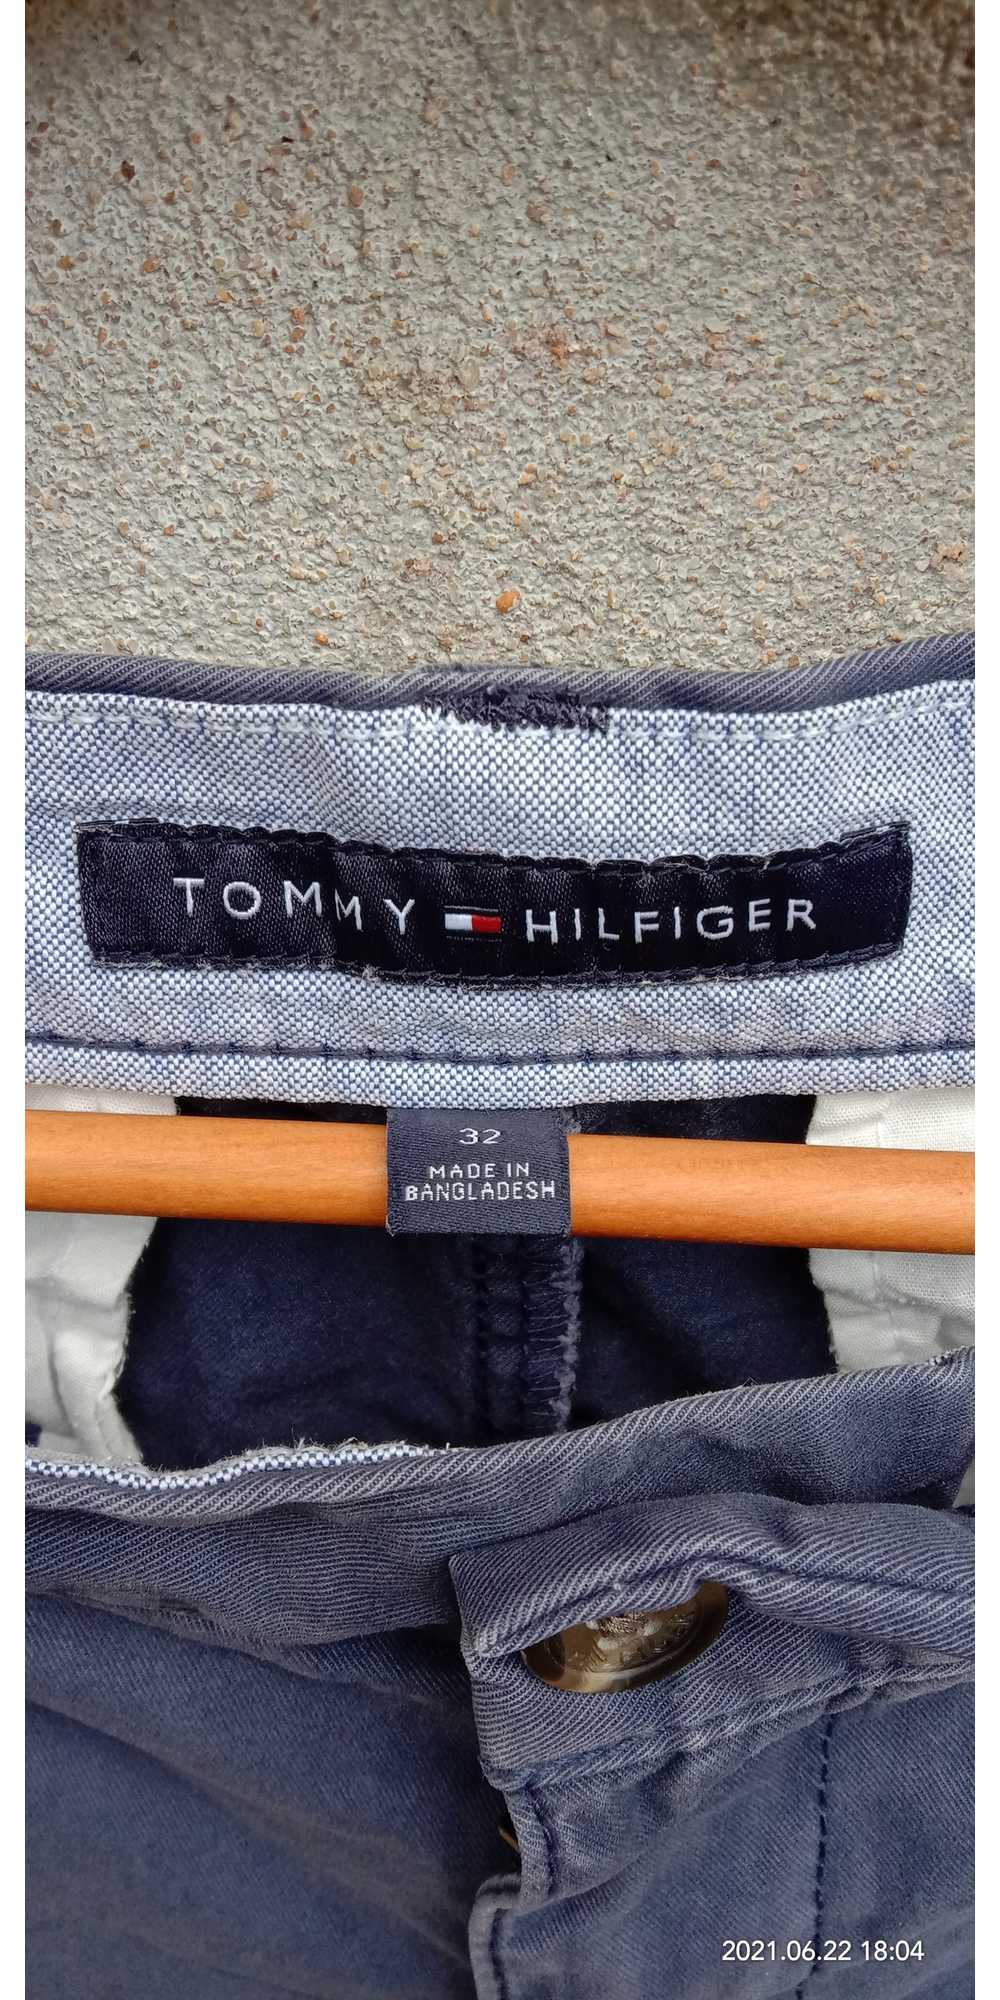 Tommy Hilfiger Tommy Hilfiger Shorts Pants - image 5